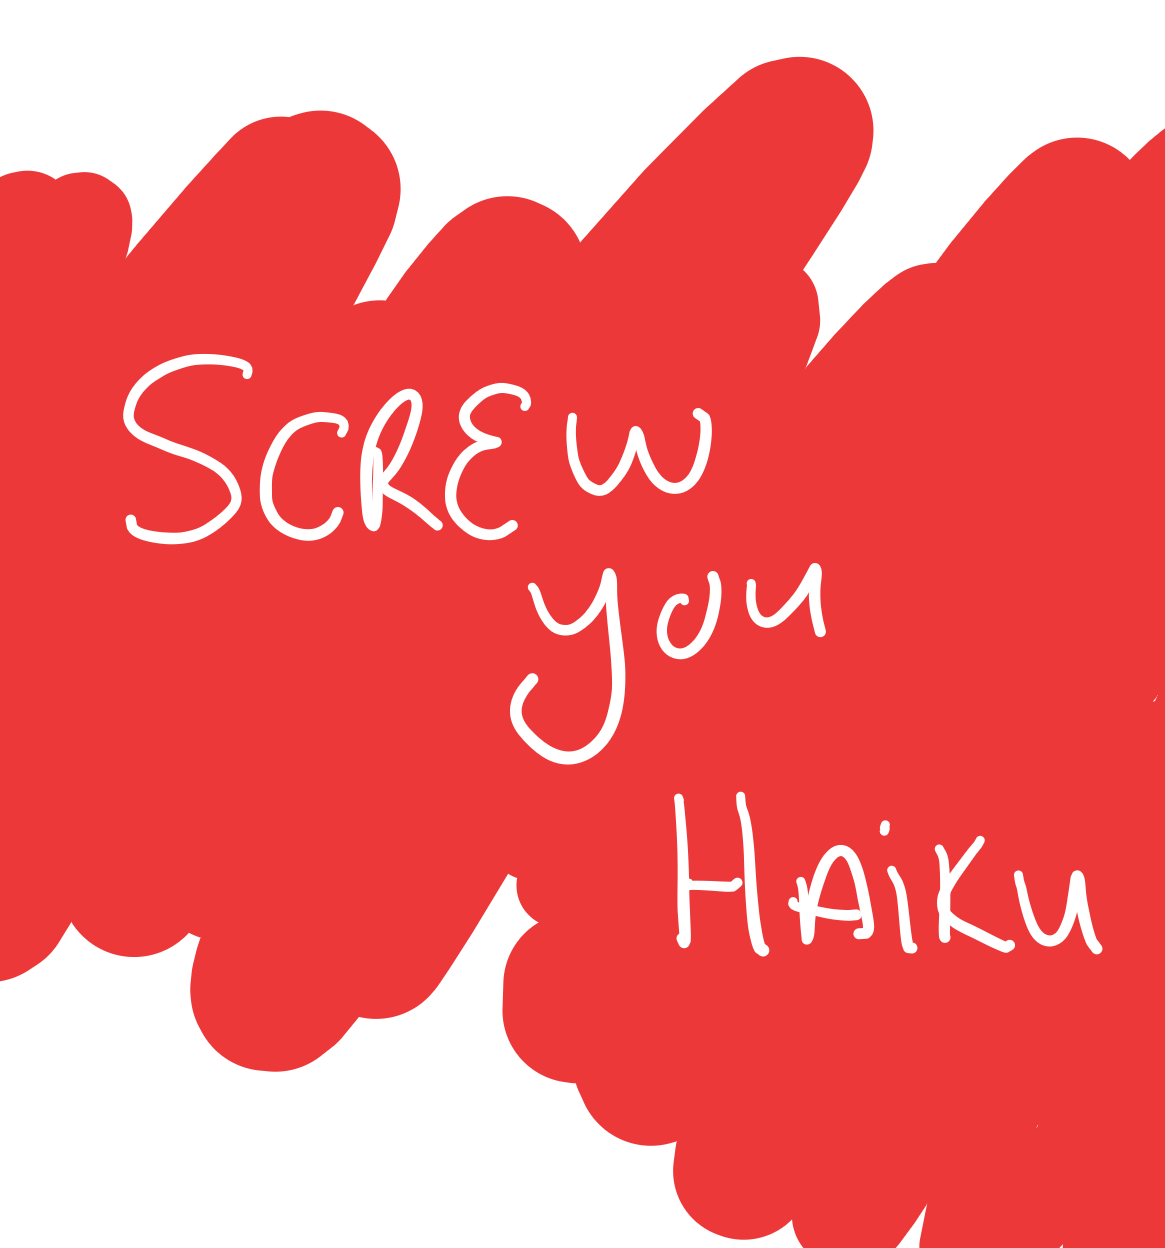 Screw you haiku